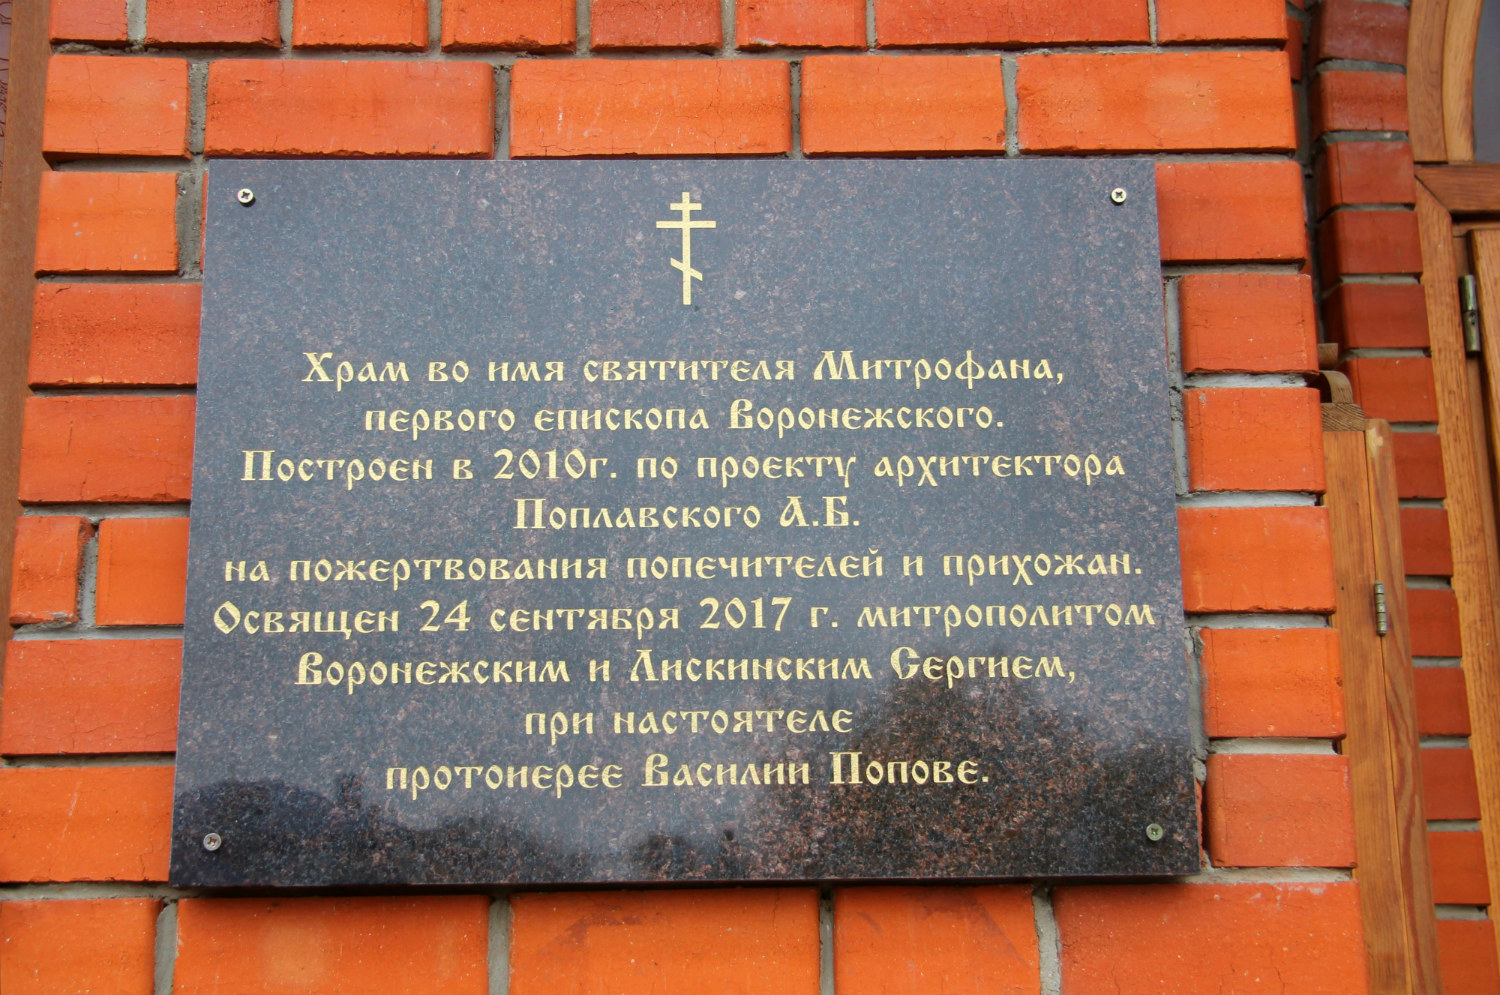 Semiluki, Улица 25 лет Октября, 112Б. Semiluky District, other localities — Memorial plaques